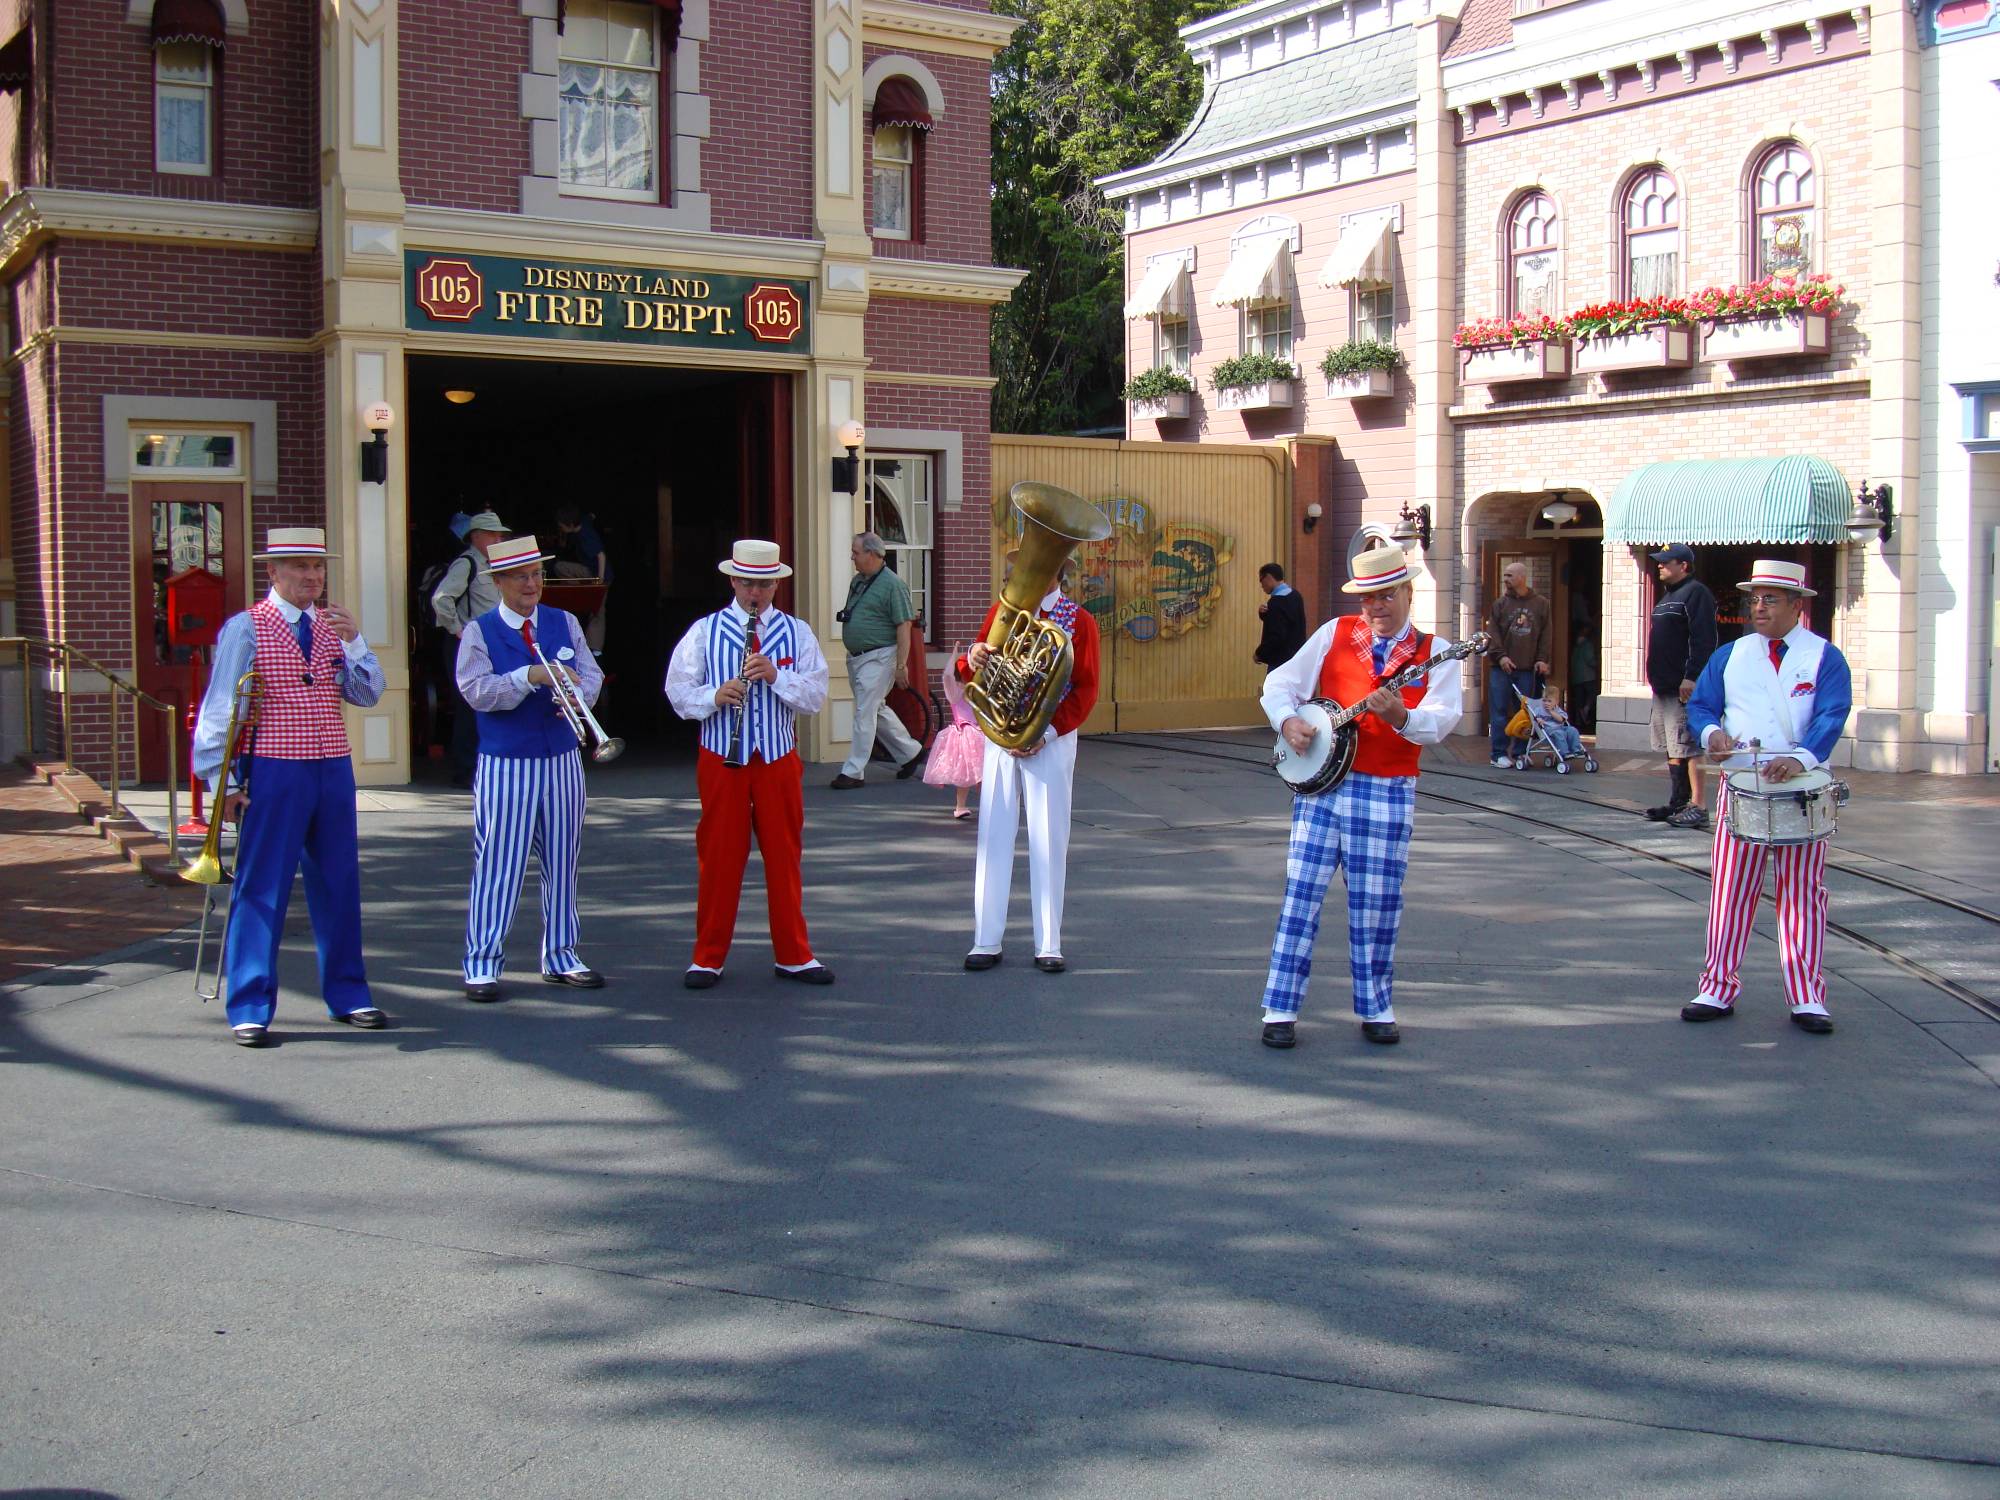 Disneyland - Main Street, U.S.A.